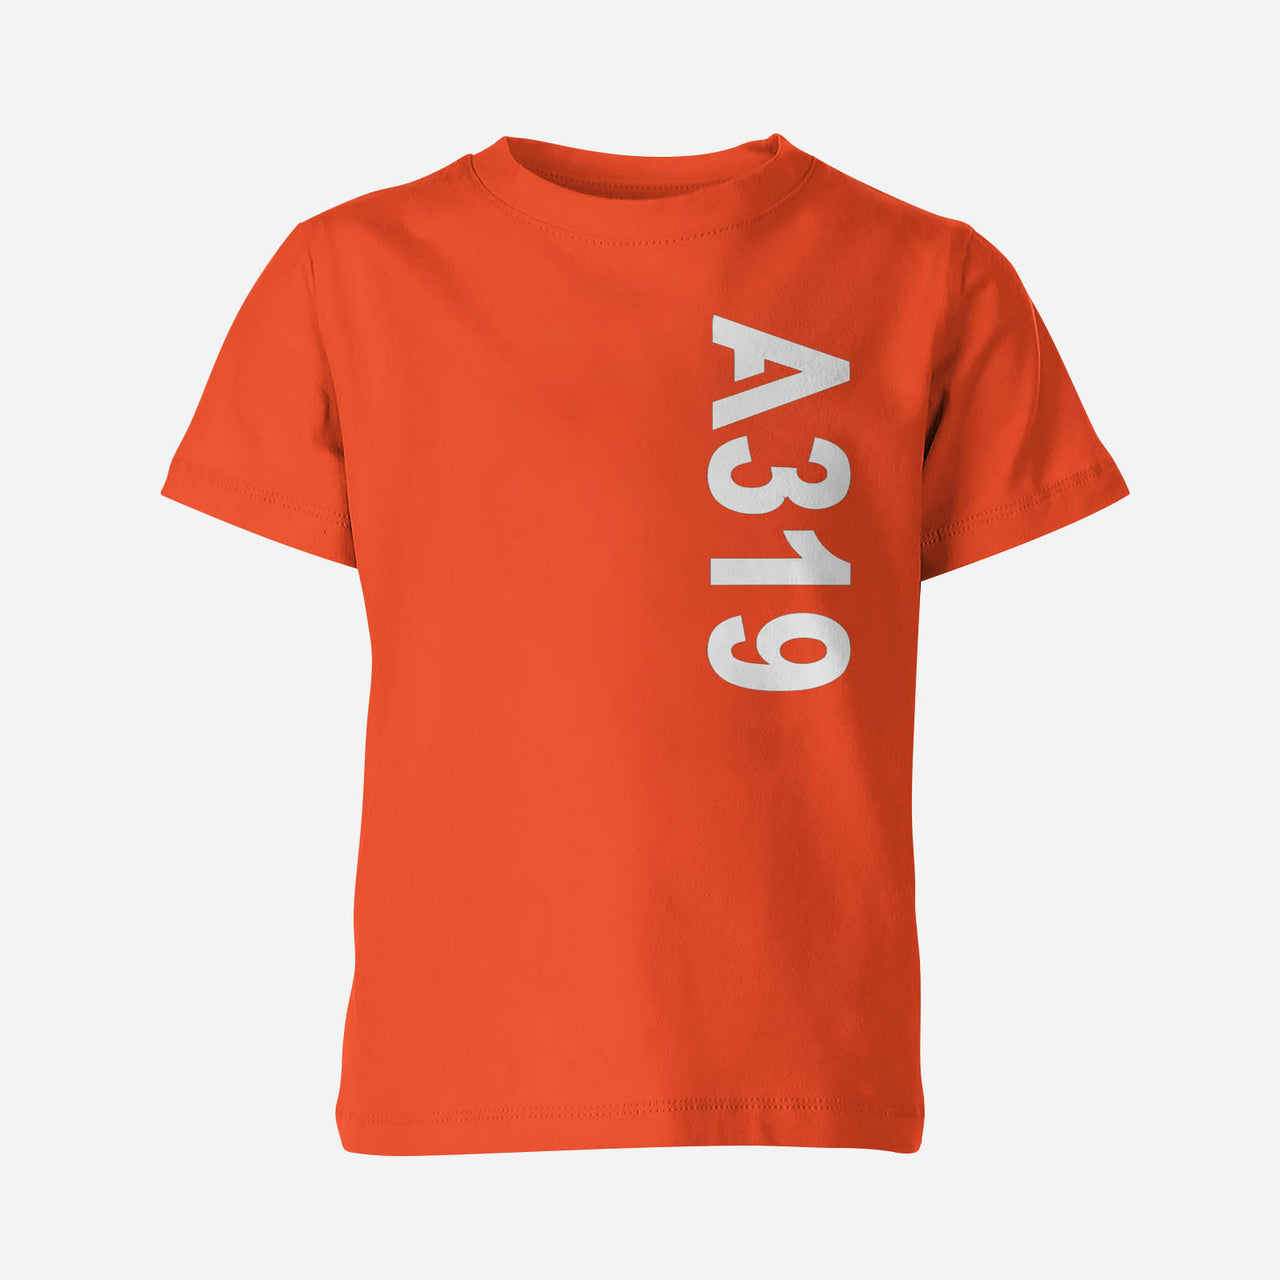 A319 Side Text Designed Children T-Shirts